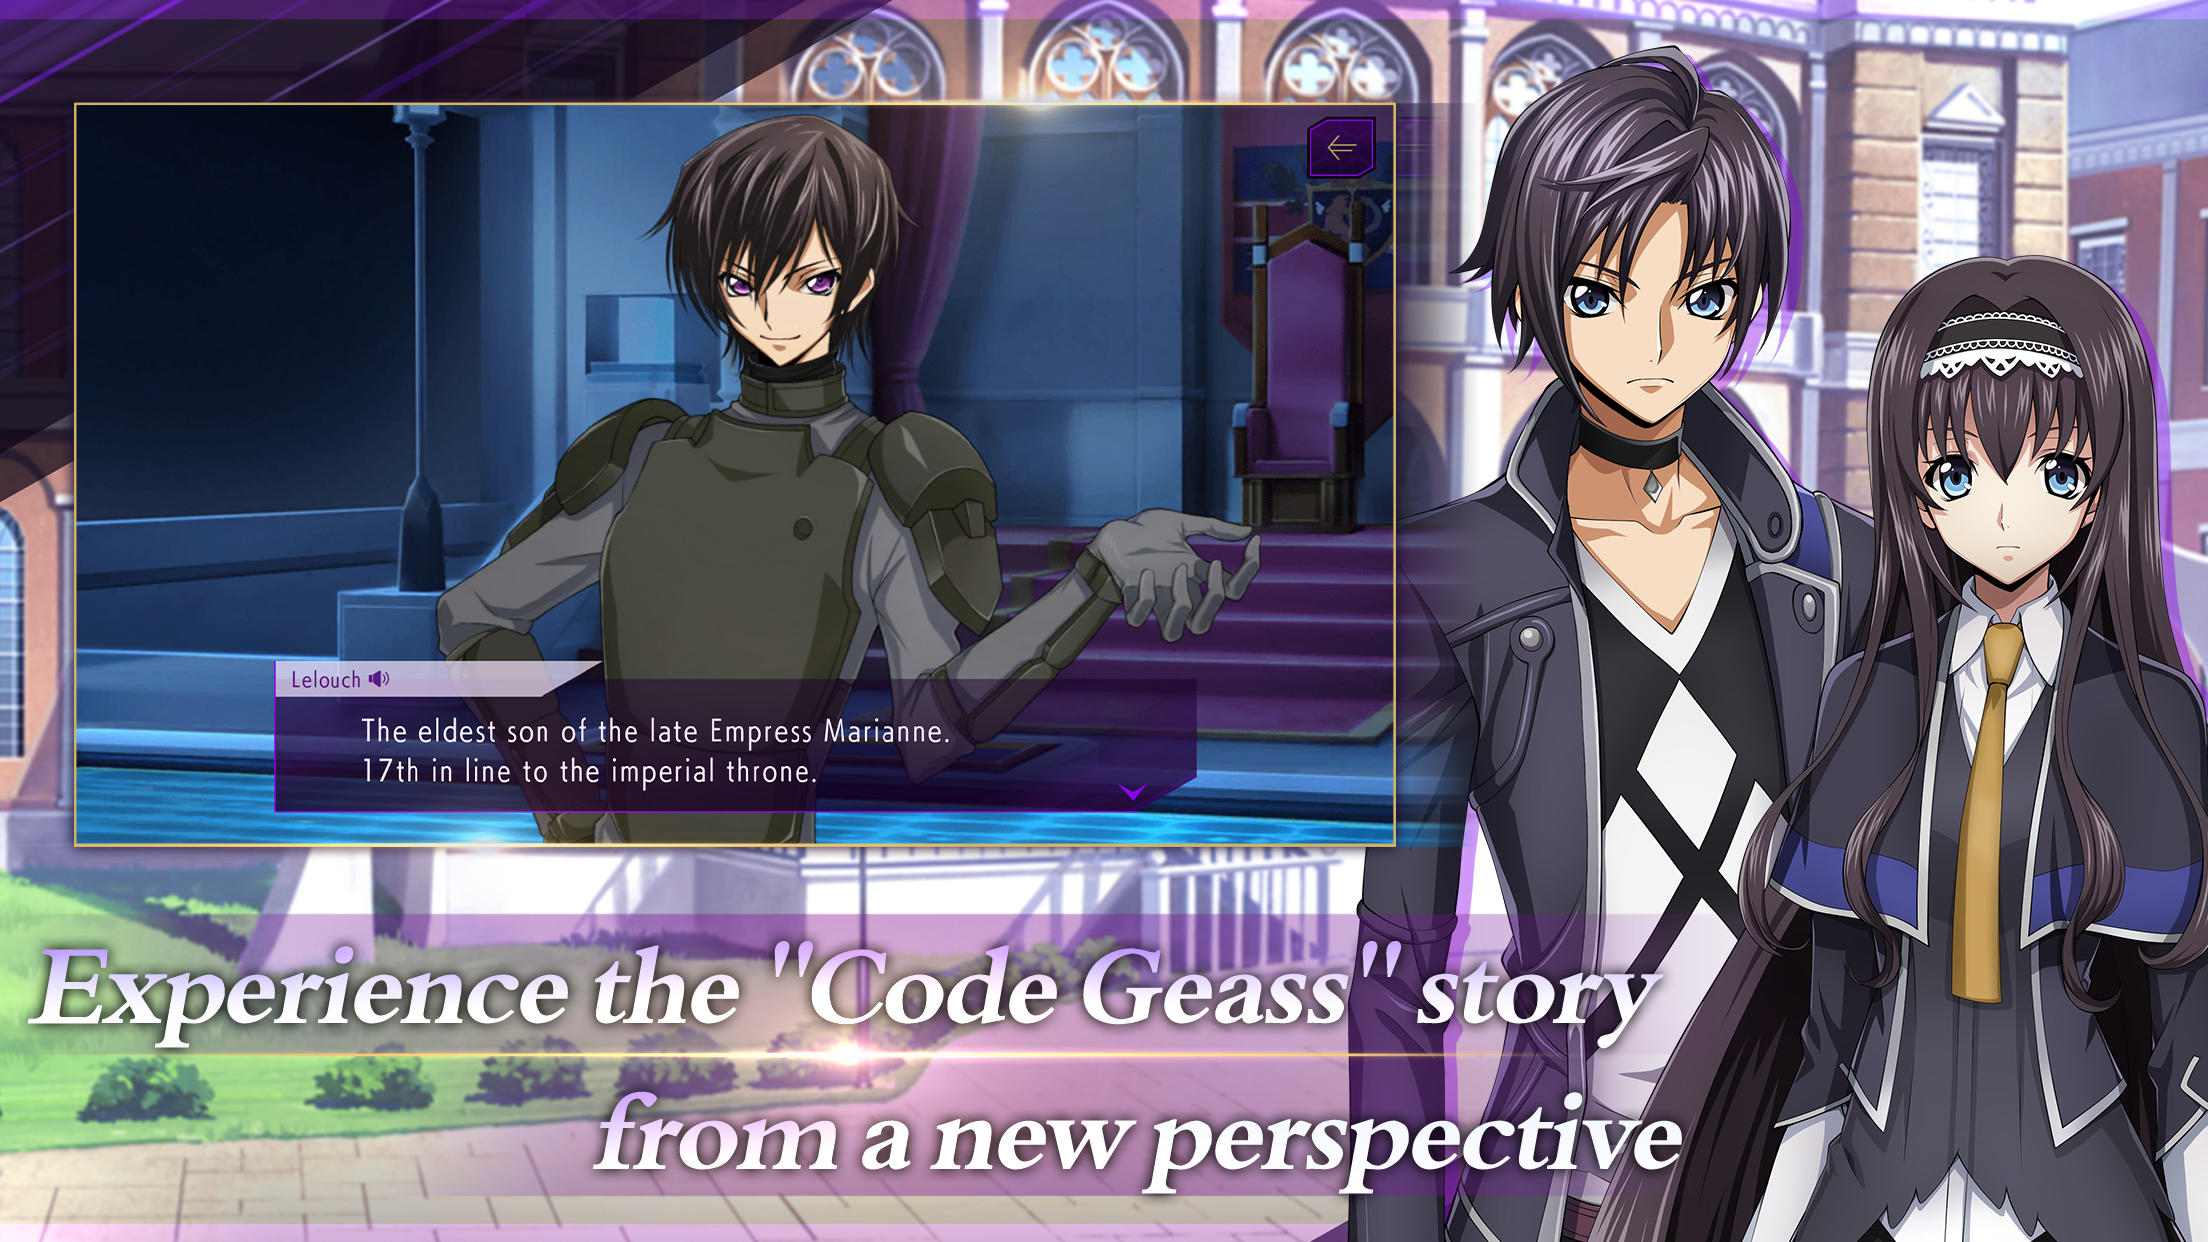 Code Geass: Lost Stories ภาพหน้าจอเกม